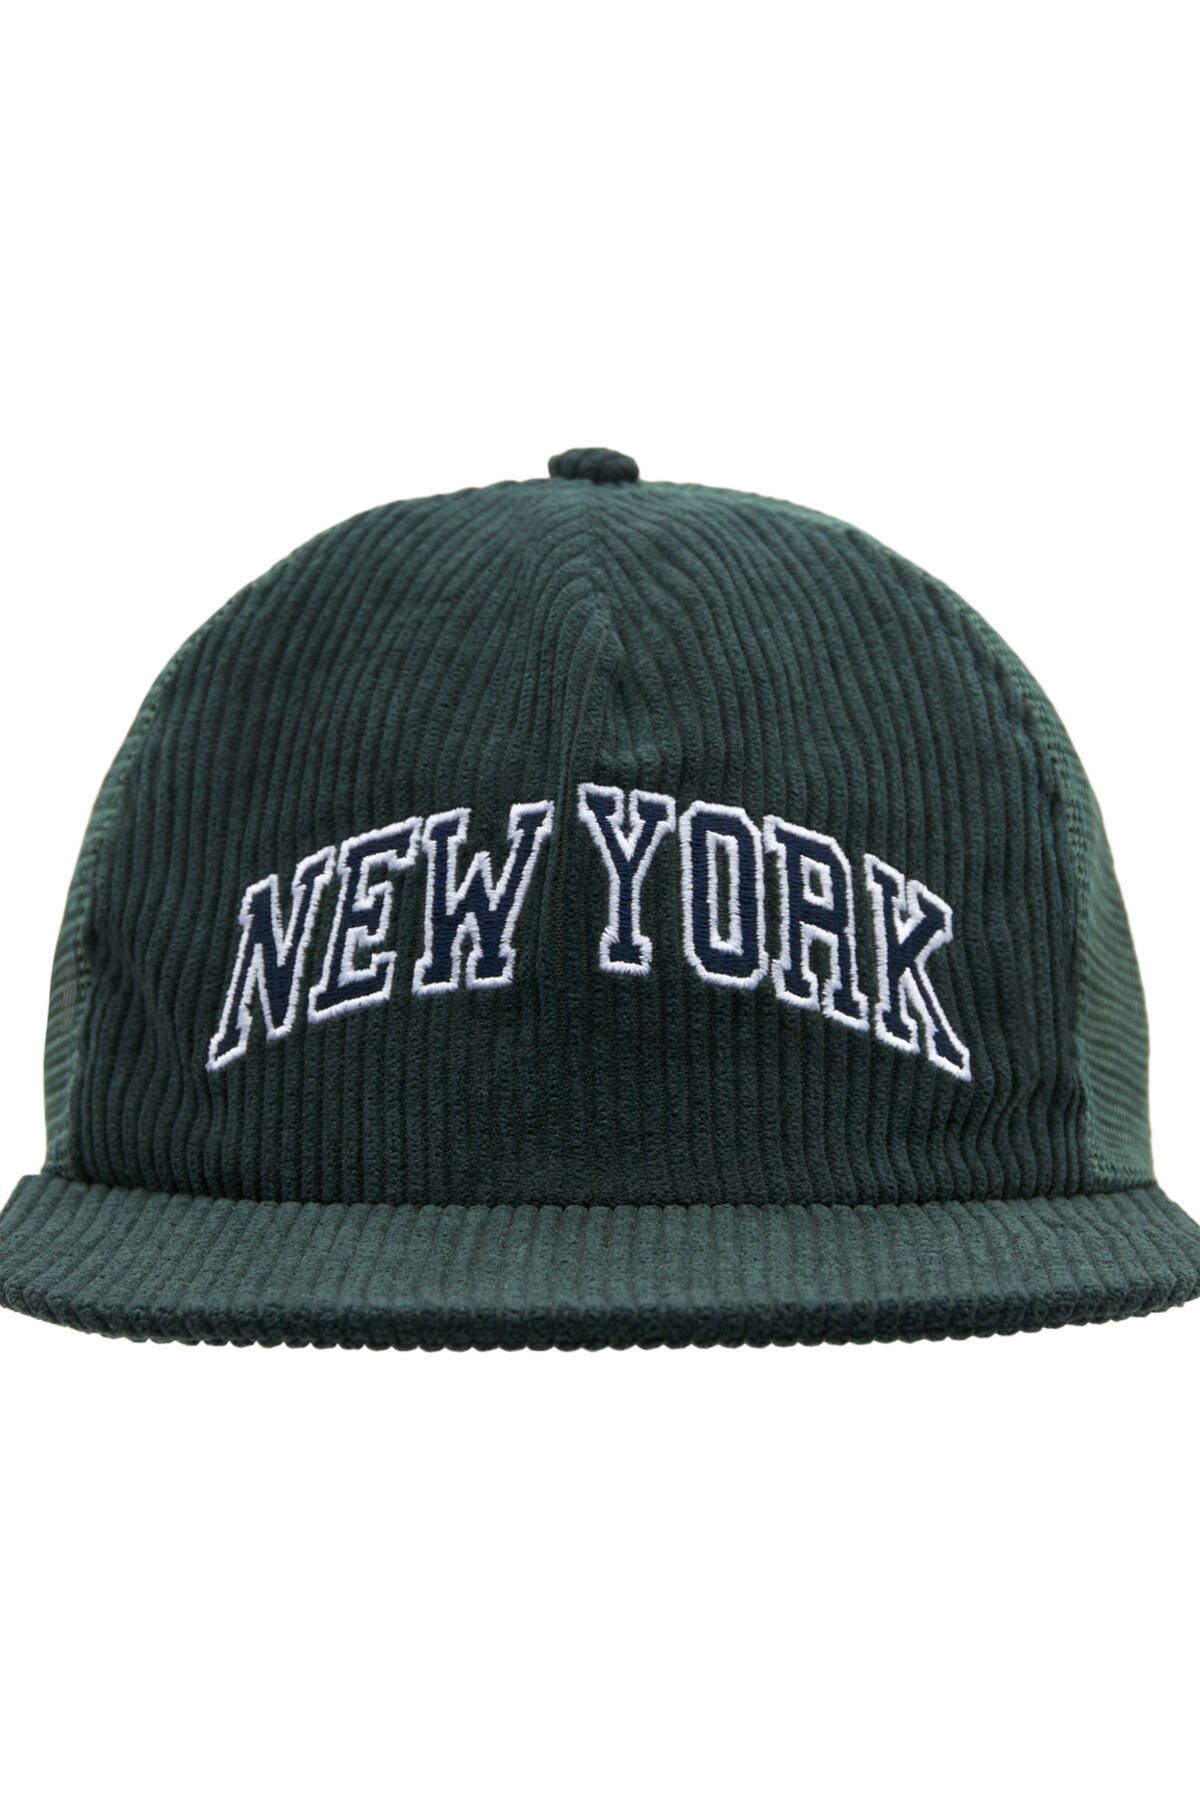 Pull & Bear New York trucker şapka